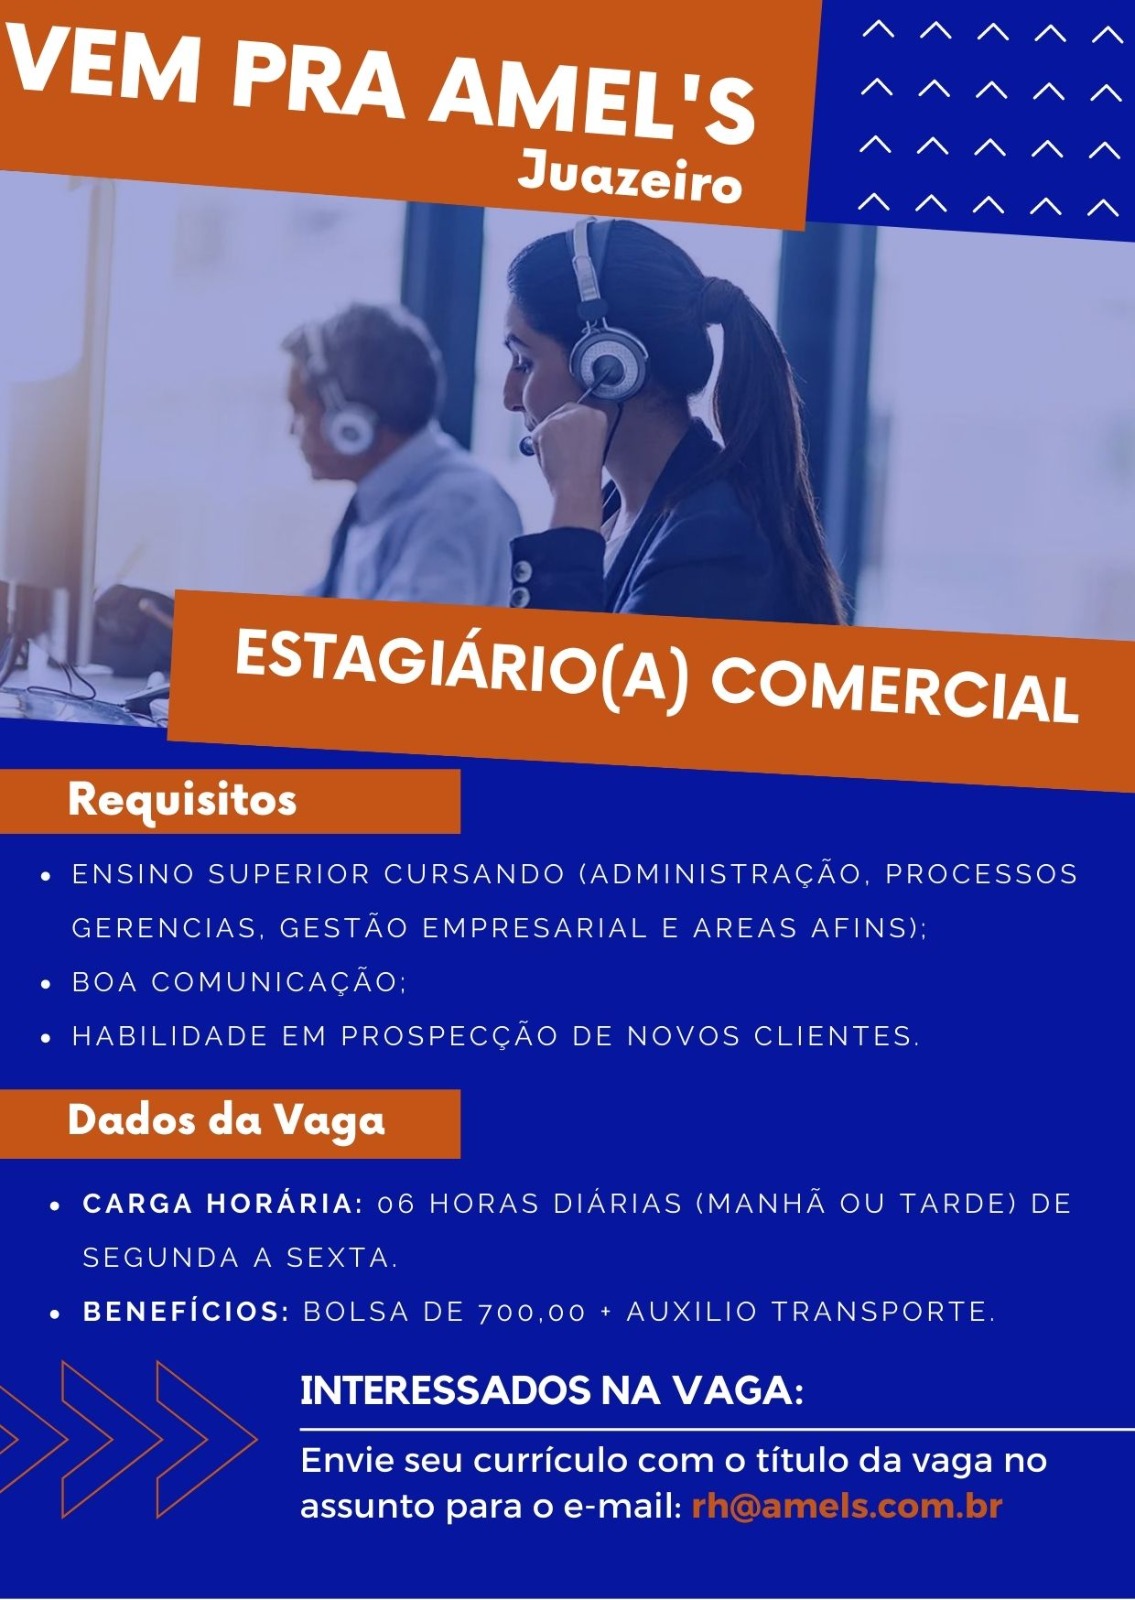  ESTÁGIO COMERCIAL - JUAZEIRO/CE